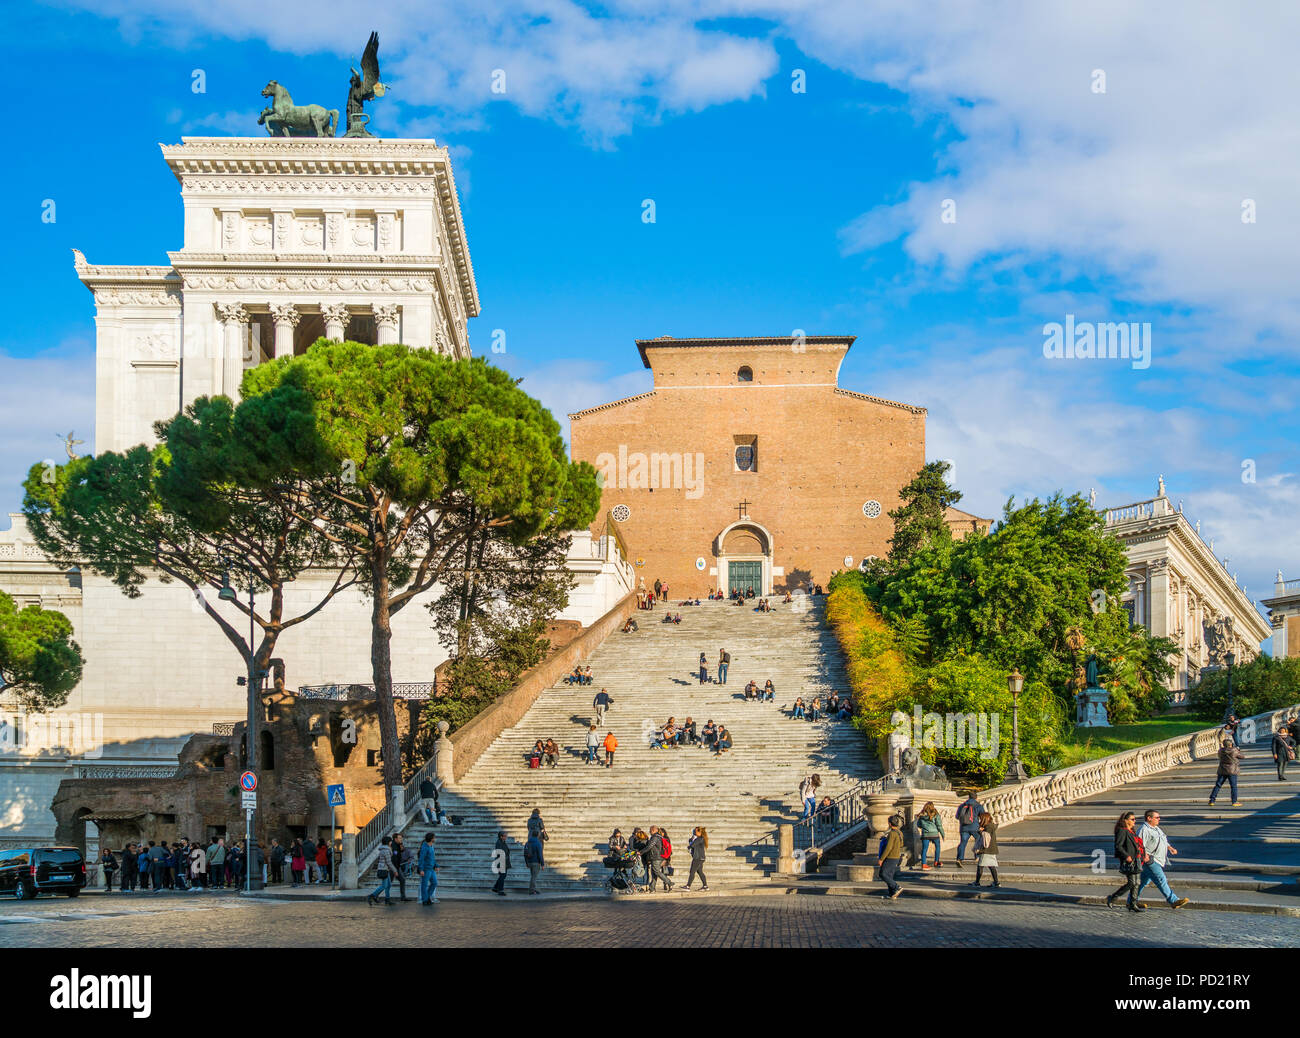 Basilica of Santa Maria in Ara Coeli, Rome, Italy Stock Photo - Alamy